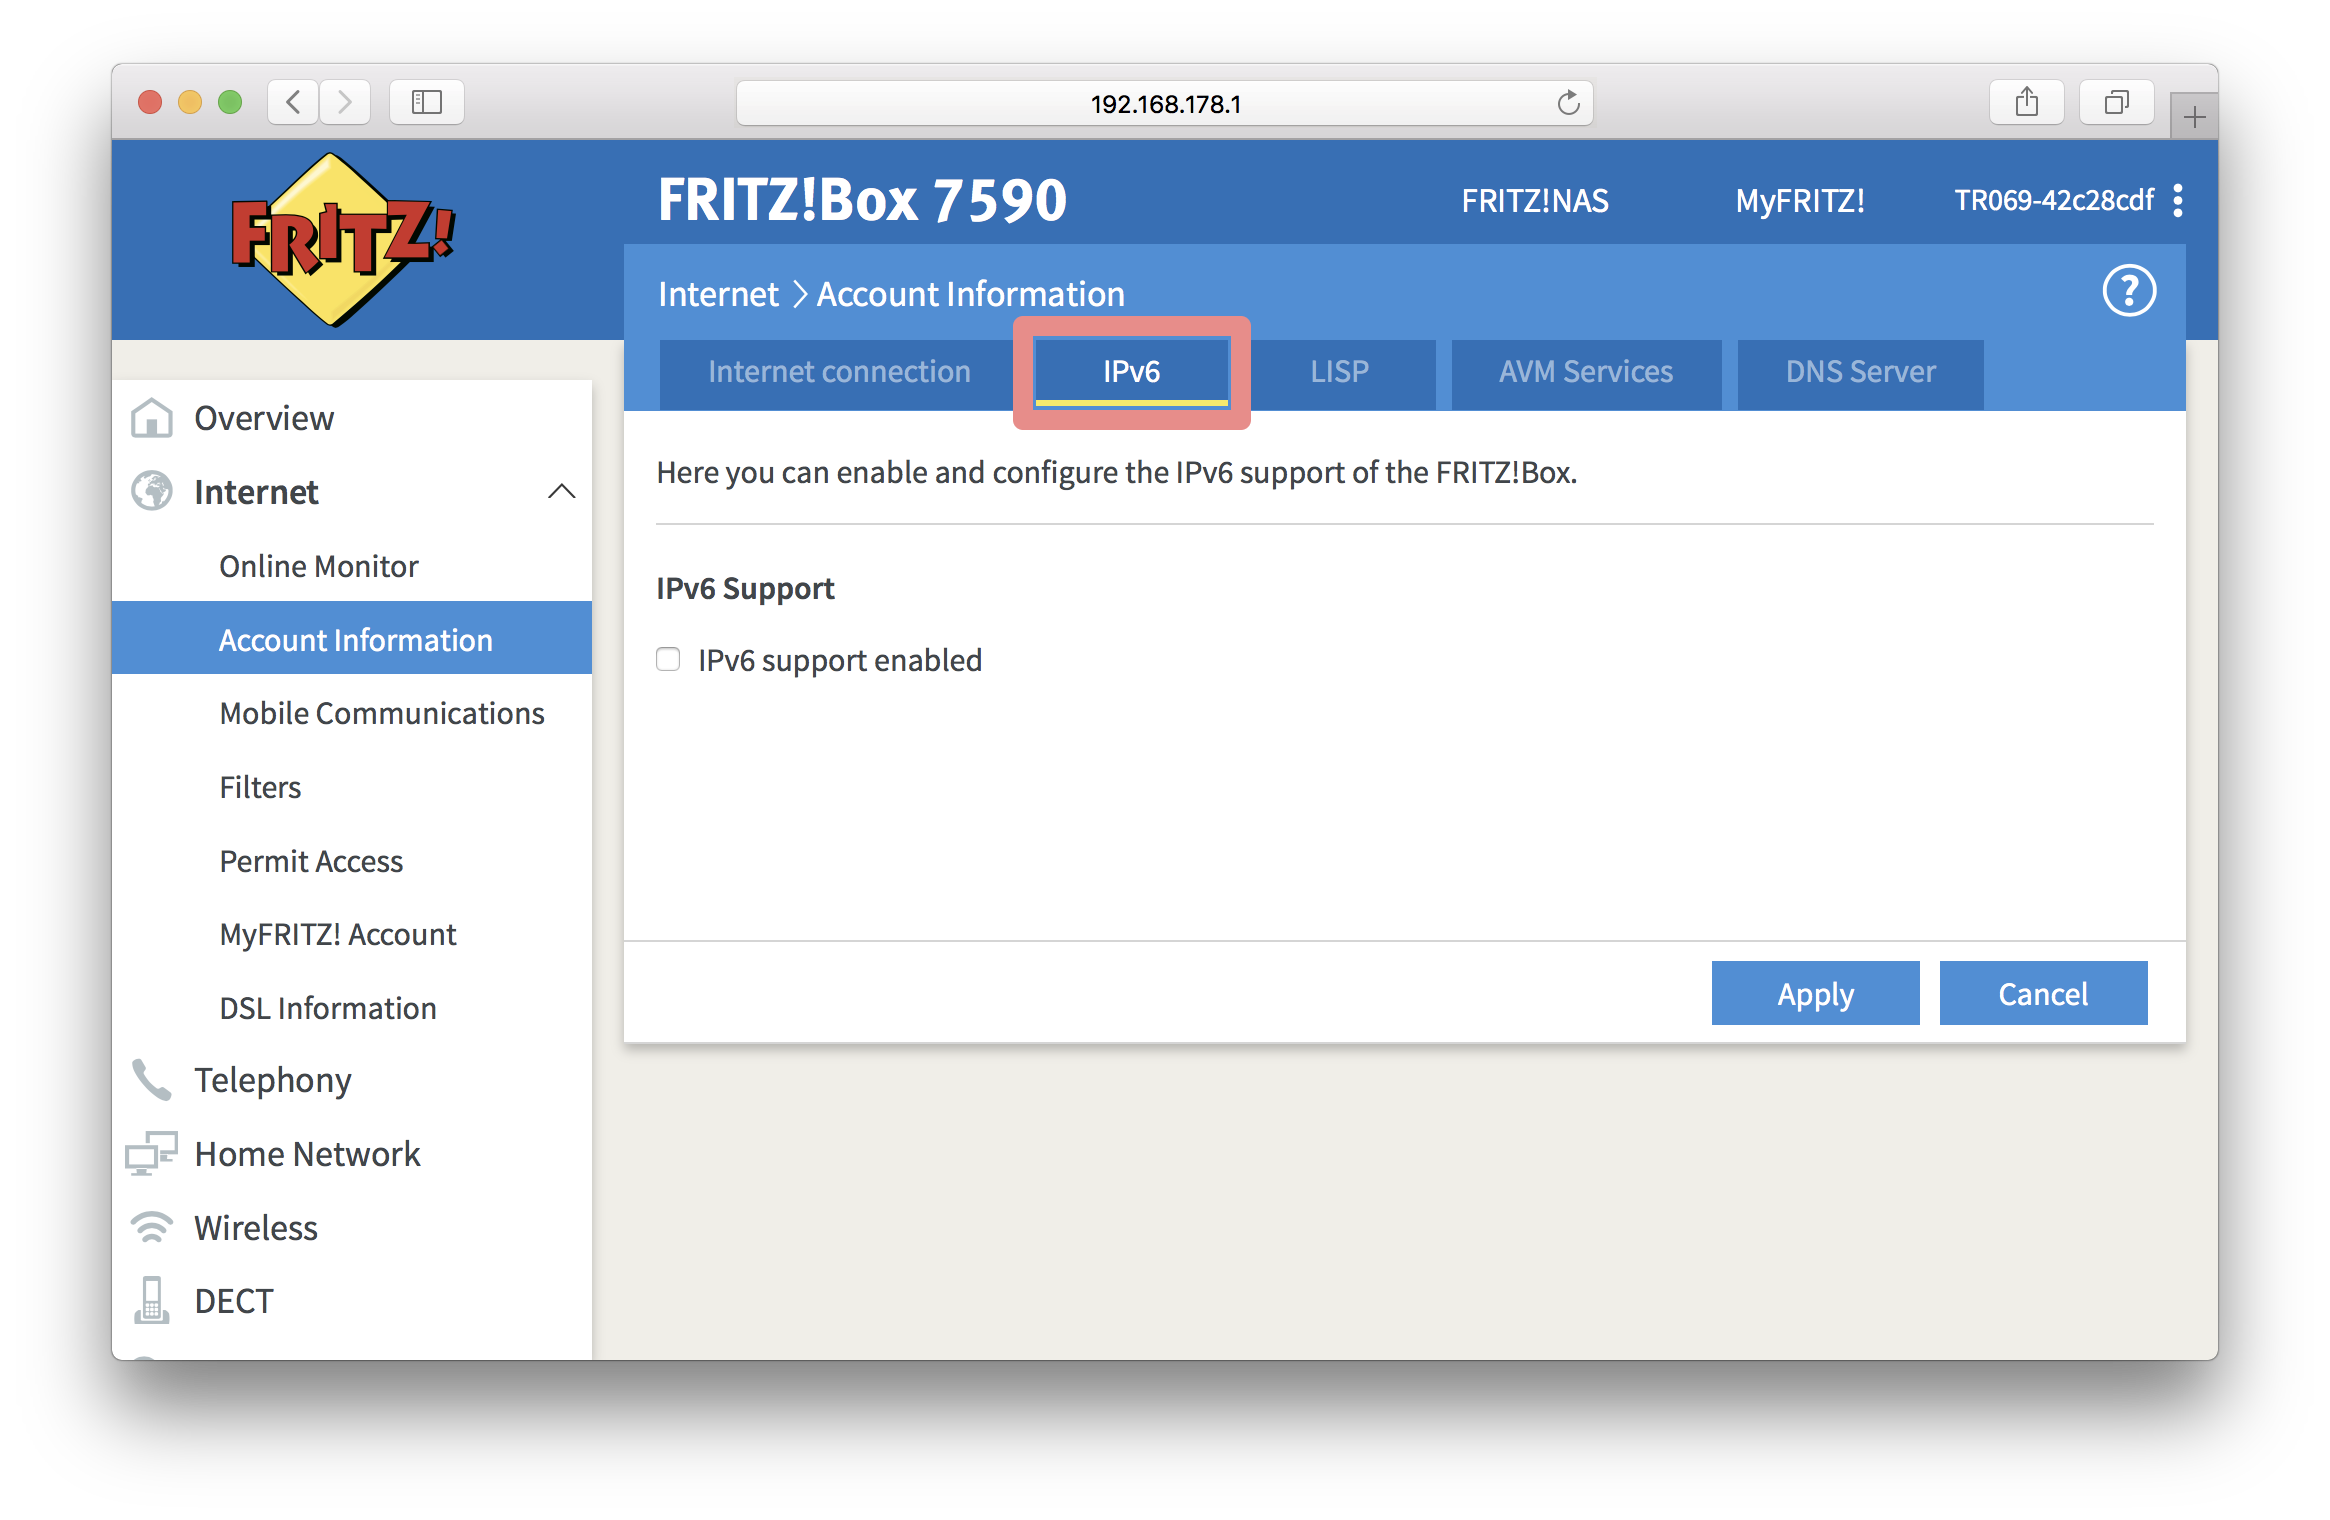 How do I enable IPv6 on my FRITZ!Box